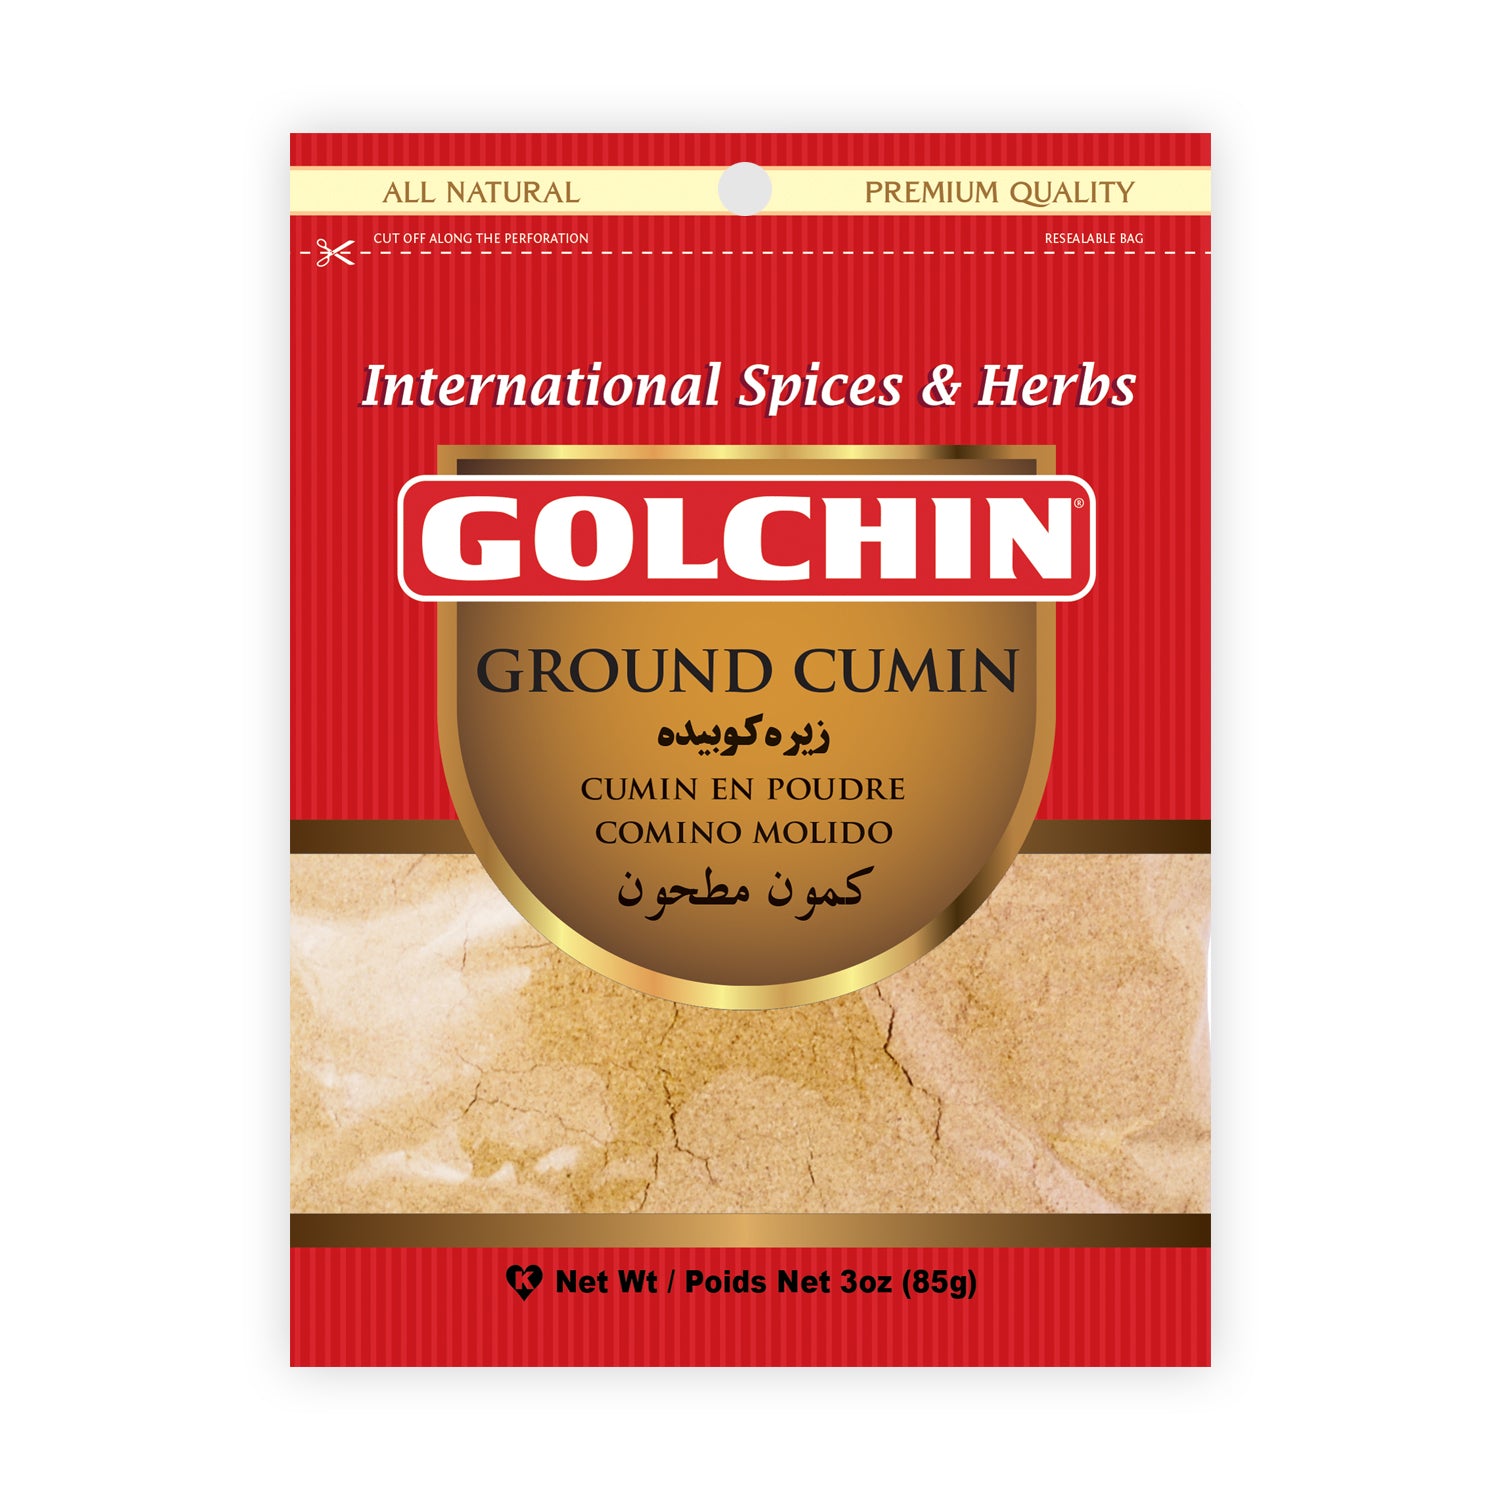 GOLCHIN GROUND CUMIN